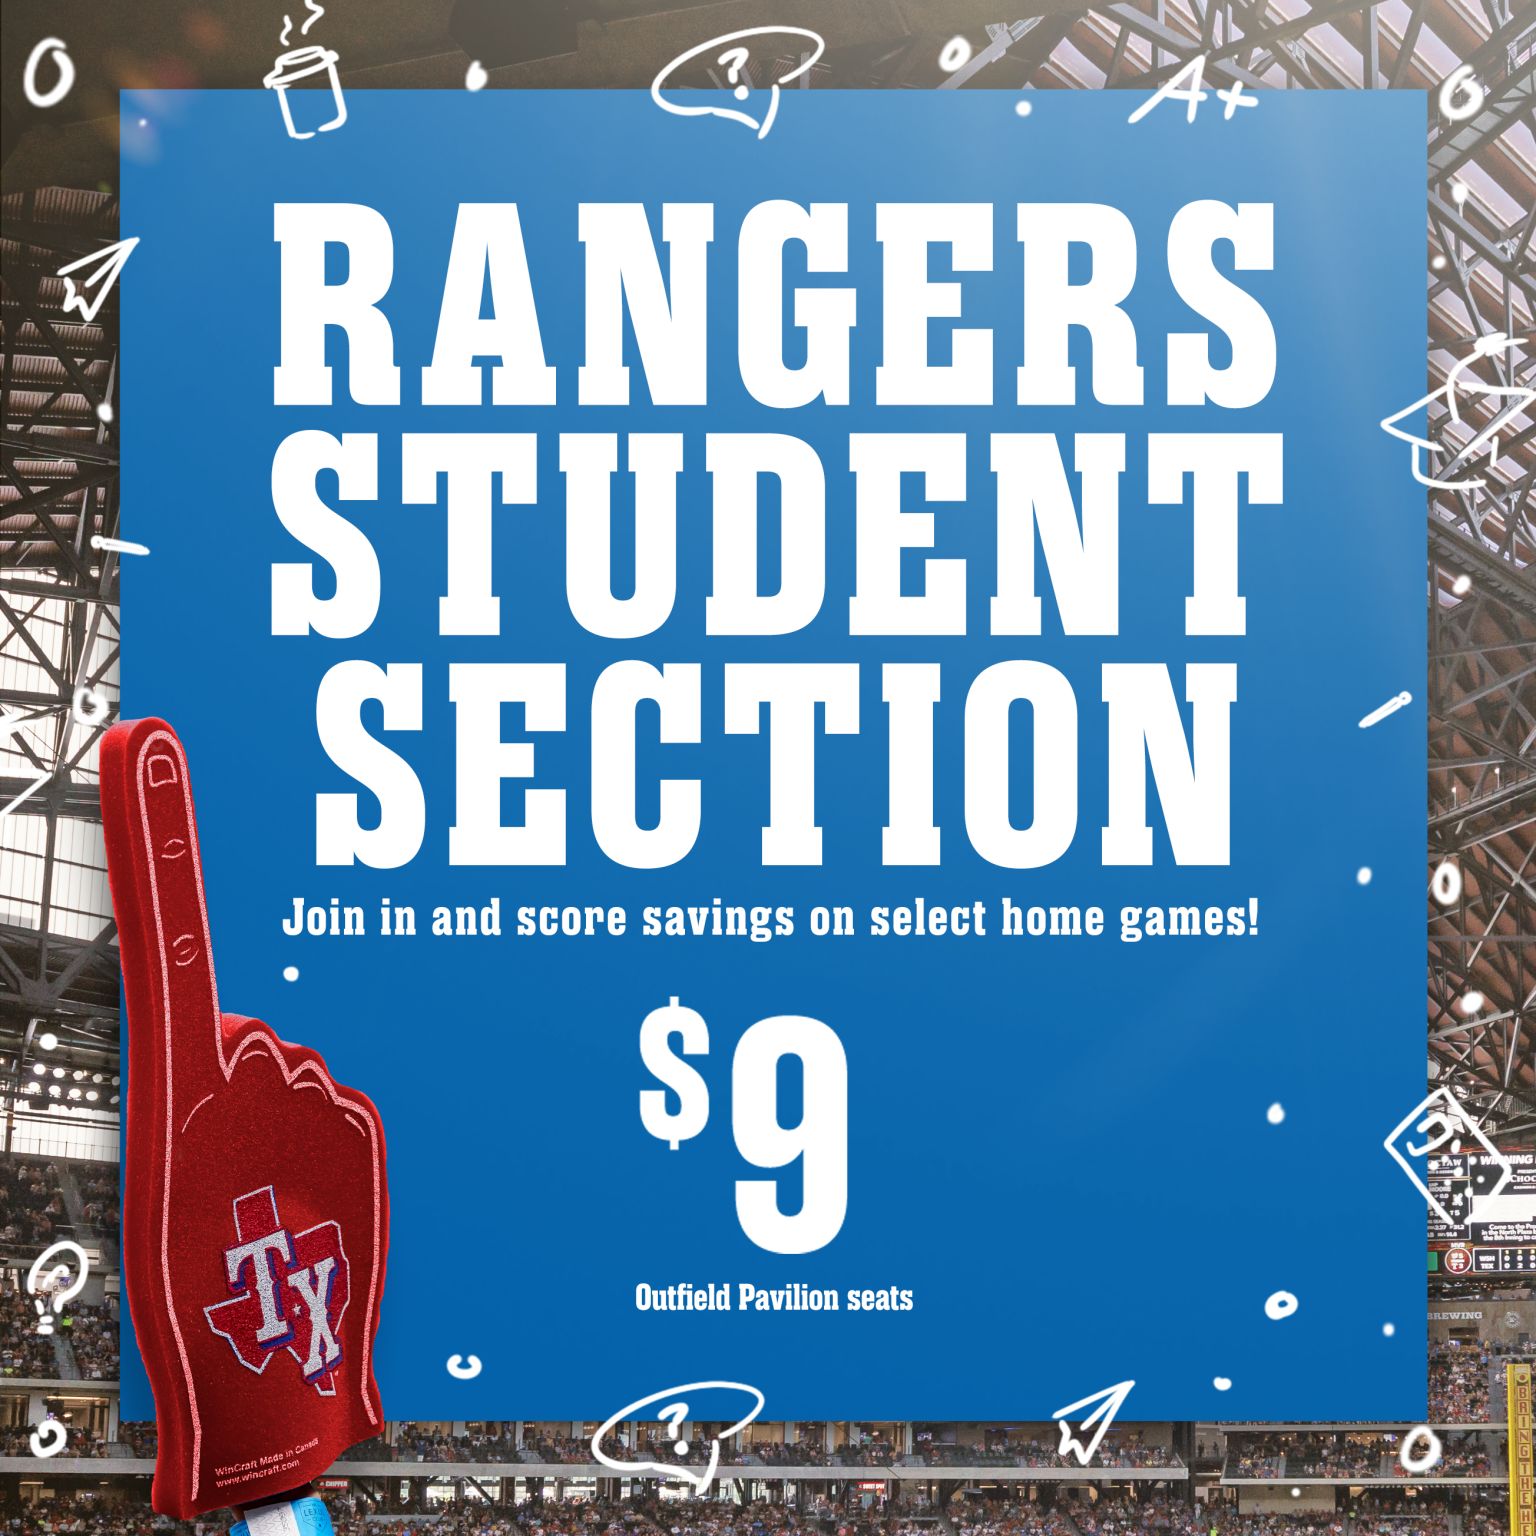 As Baseball Season Starts, Get Your Discounted Texas Rangers Tickets —  Dallas College Blog